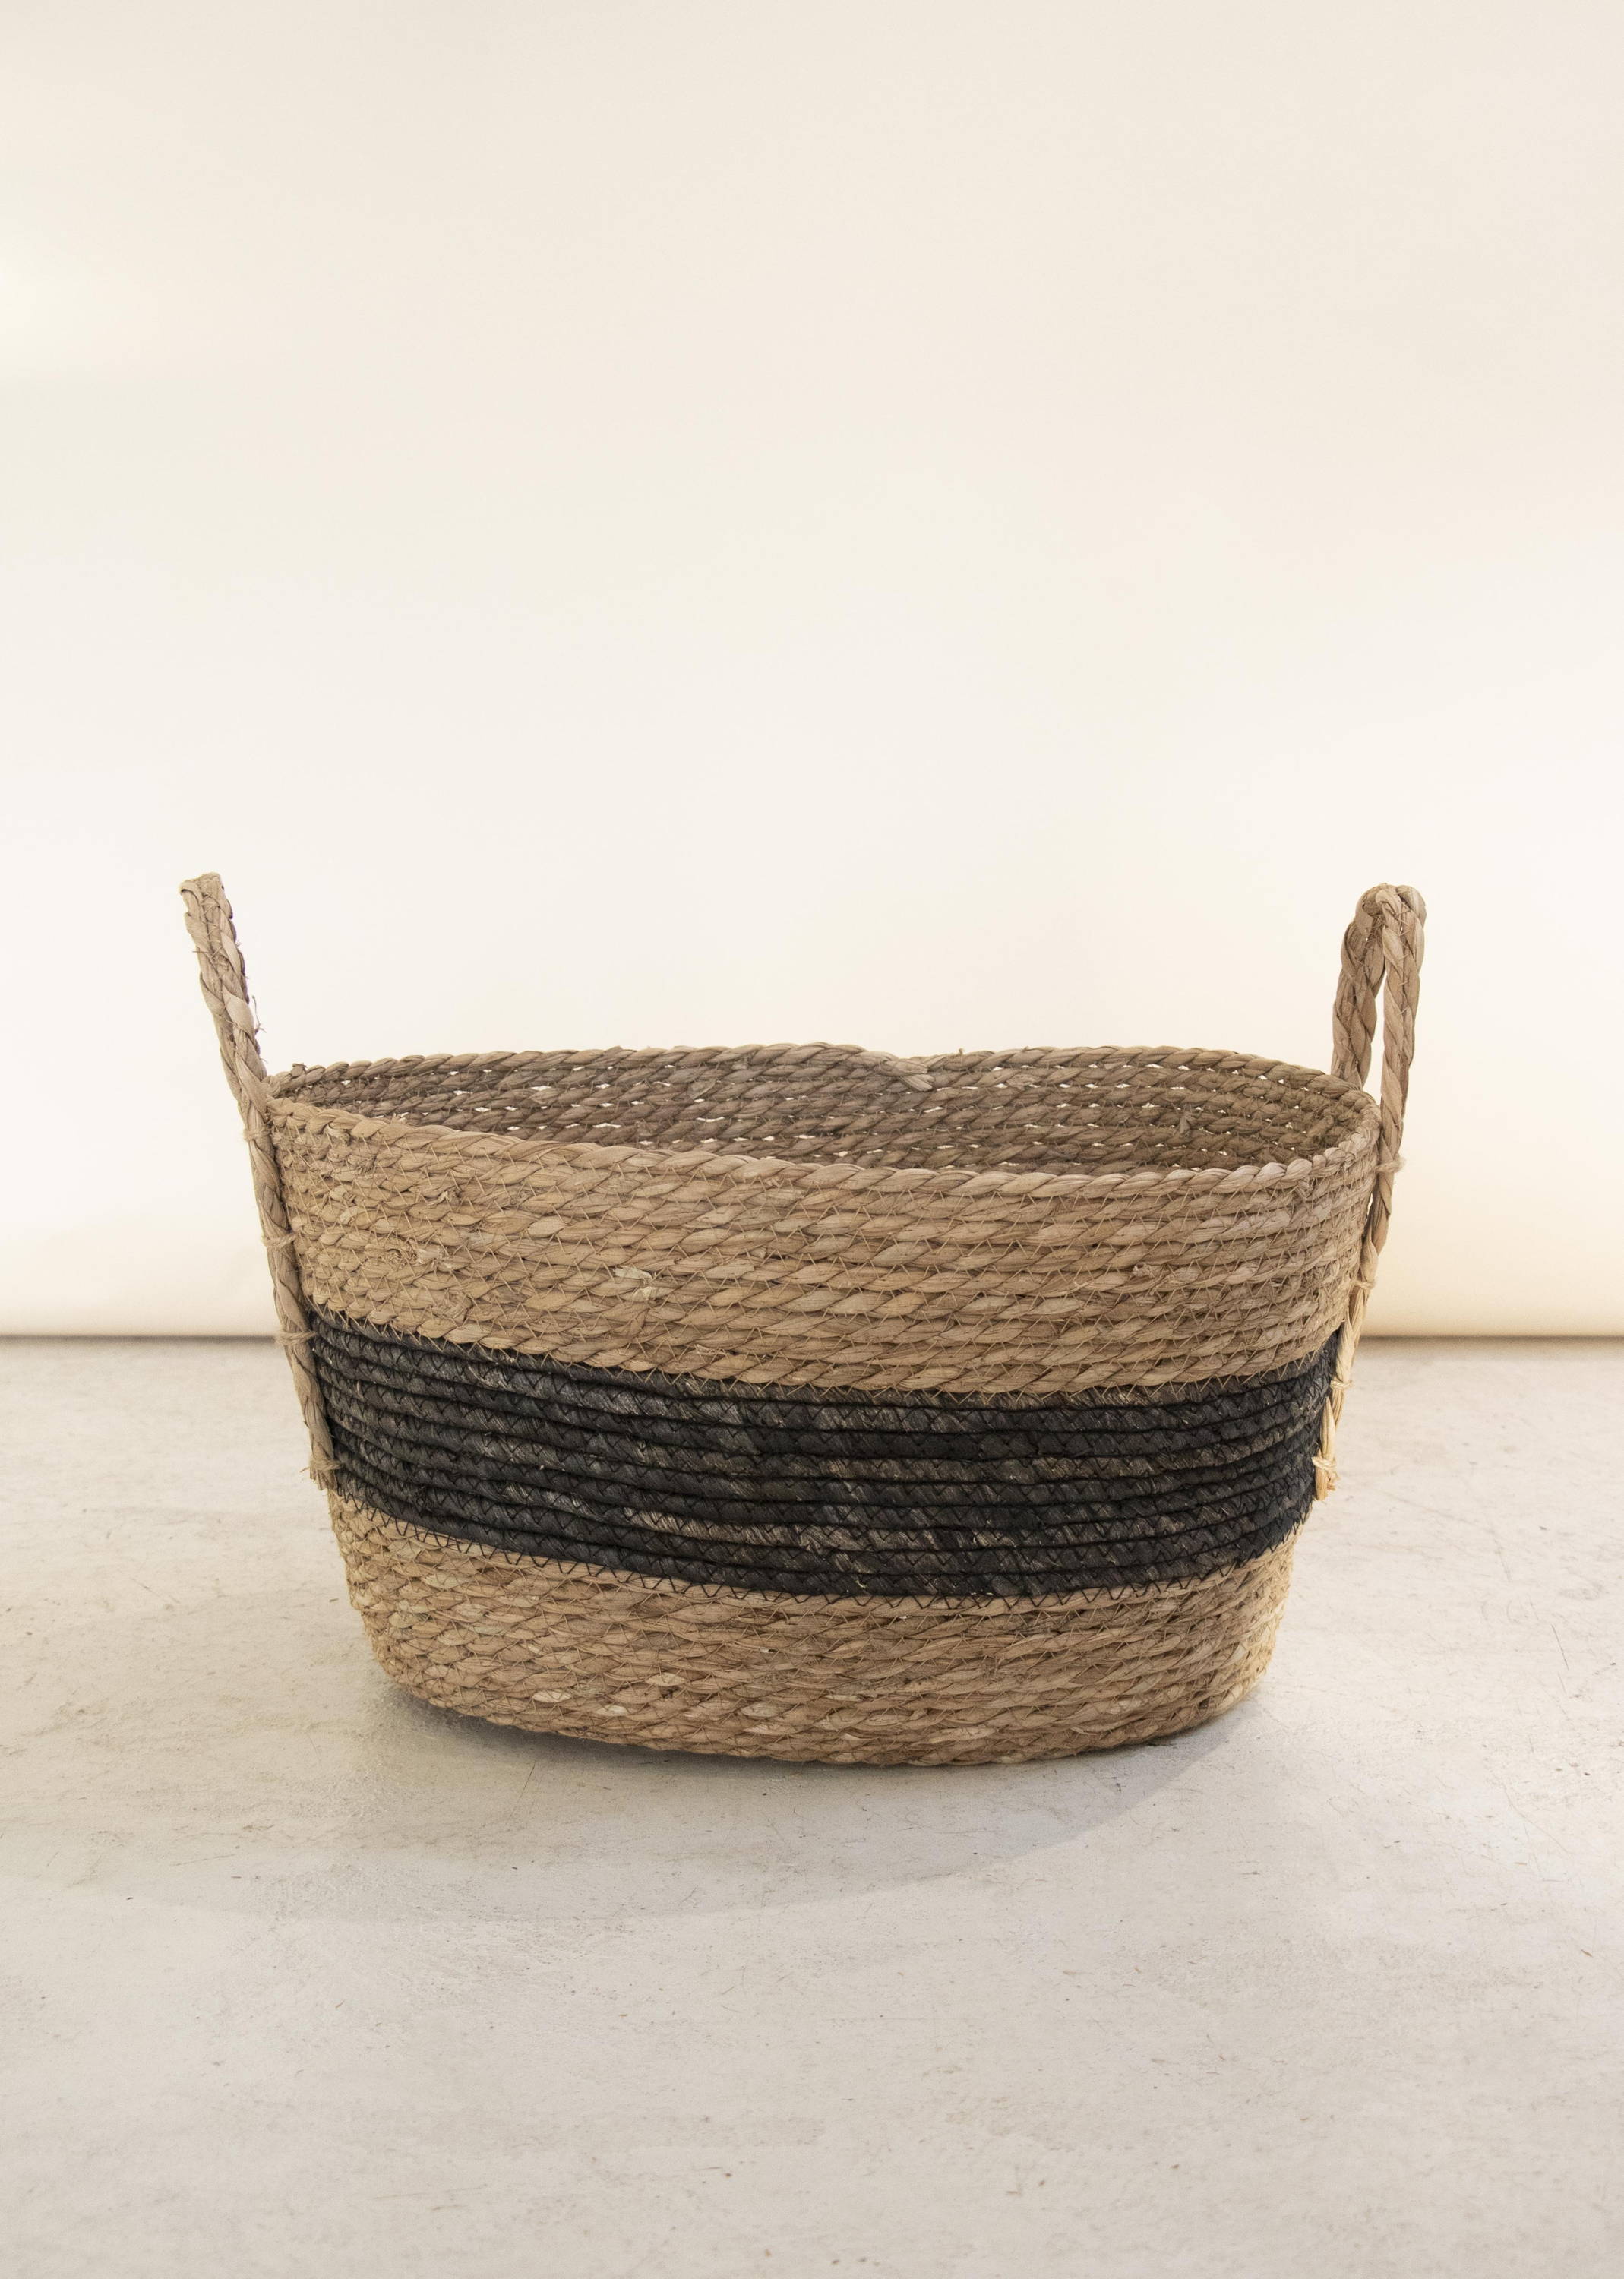 A wicker basket with stripe details